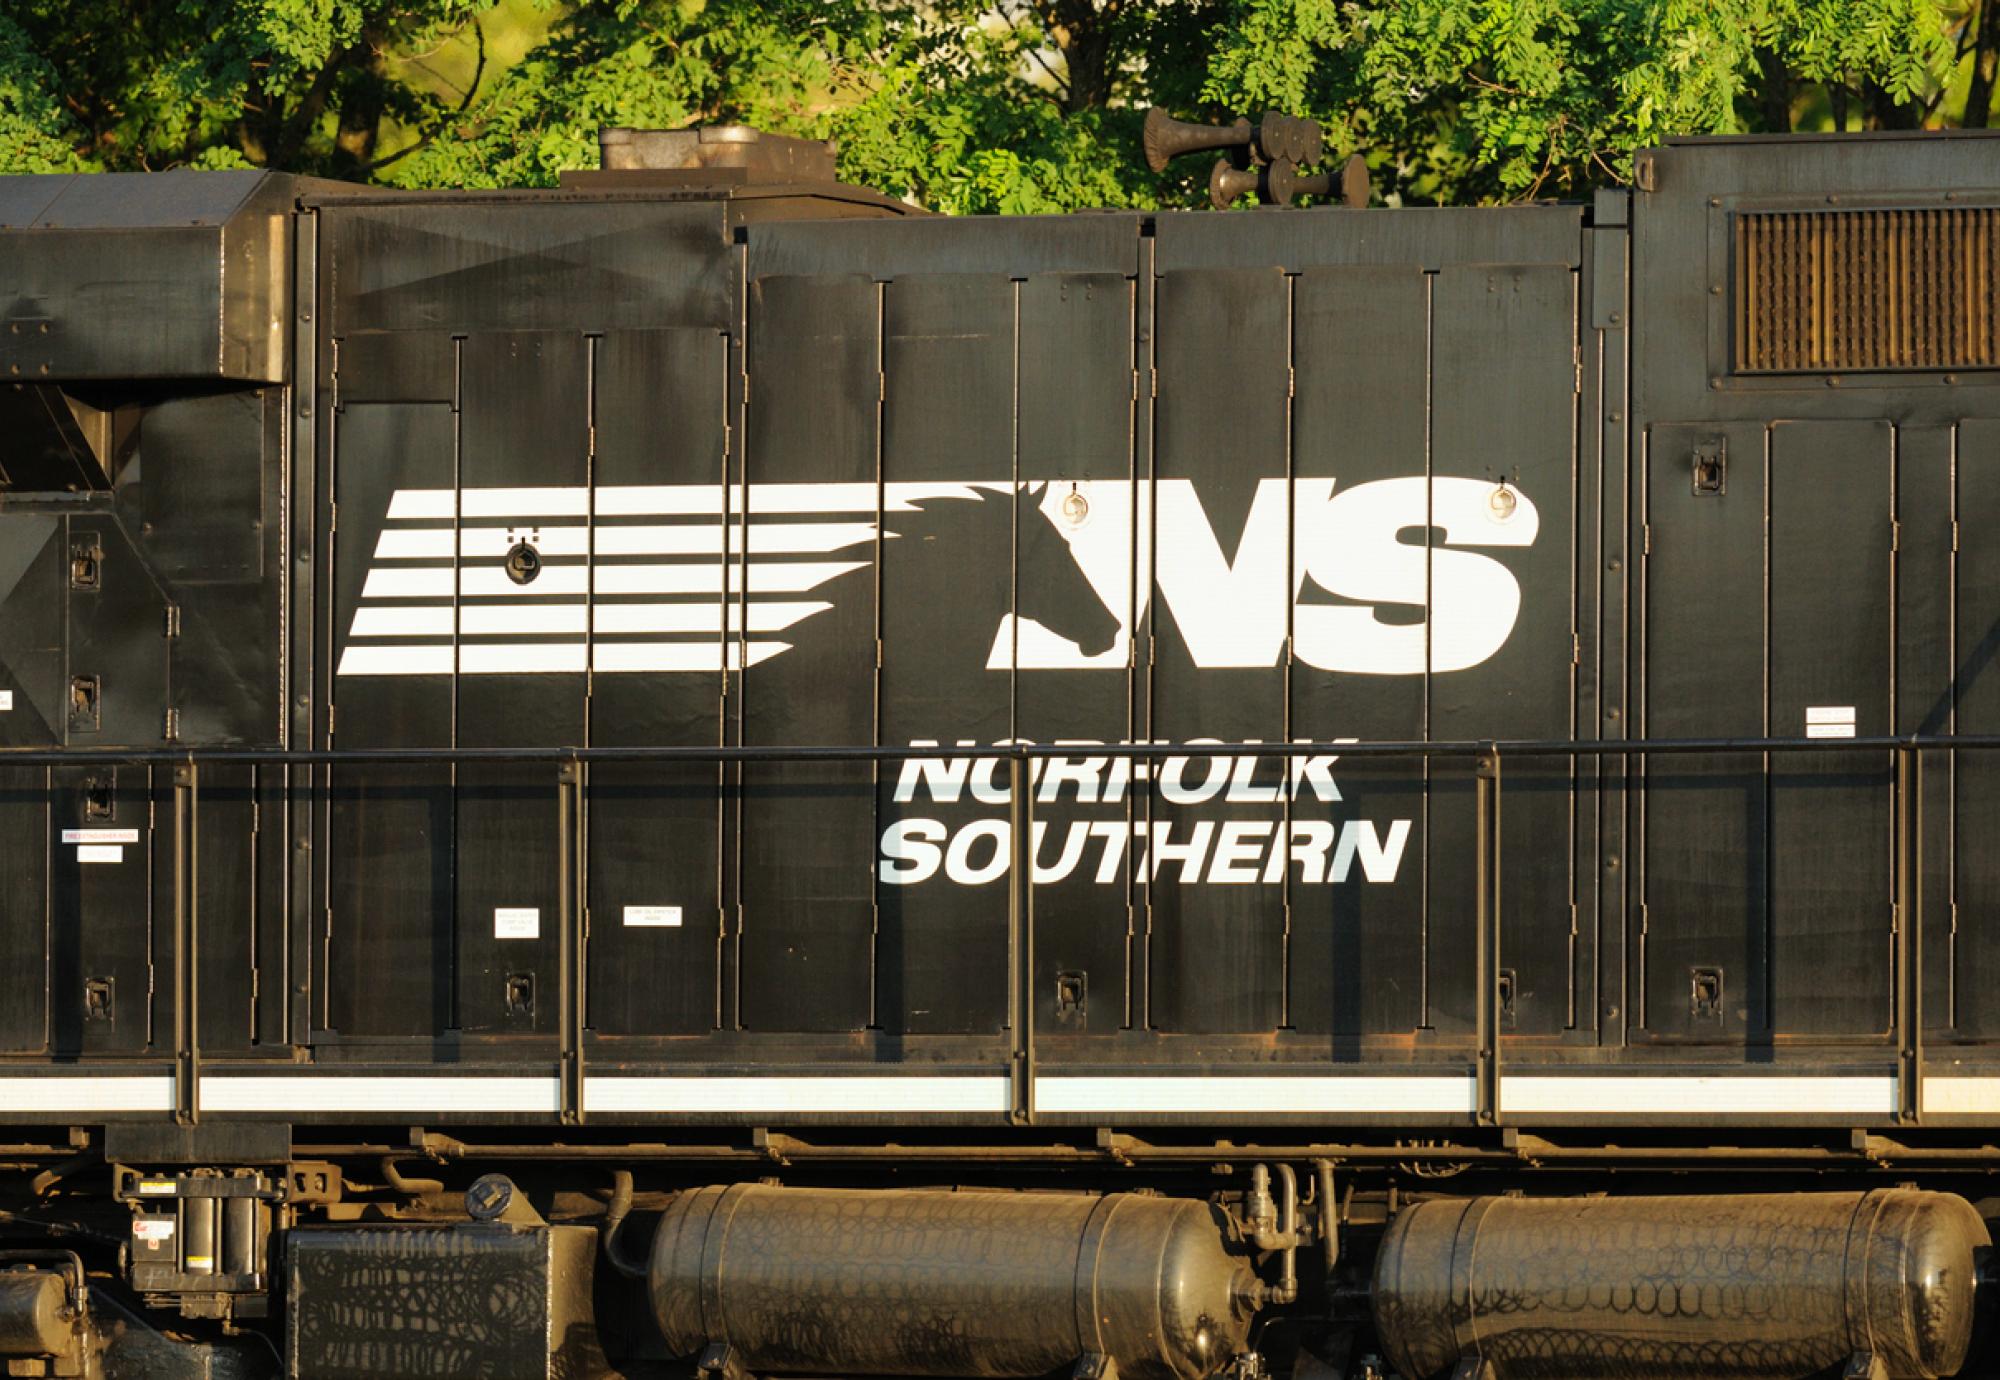 Norfolk Southern is deploying digital train inspection portals